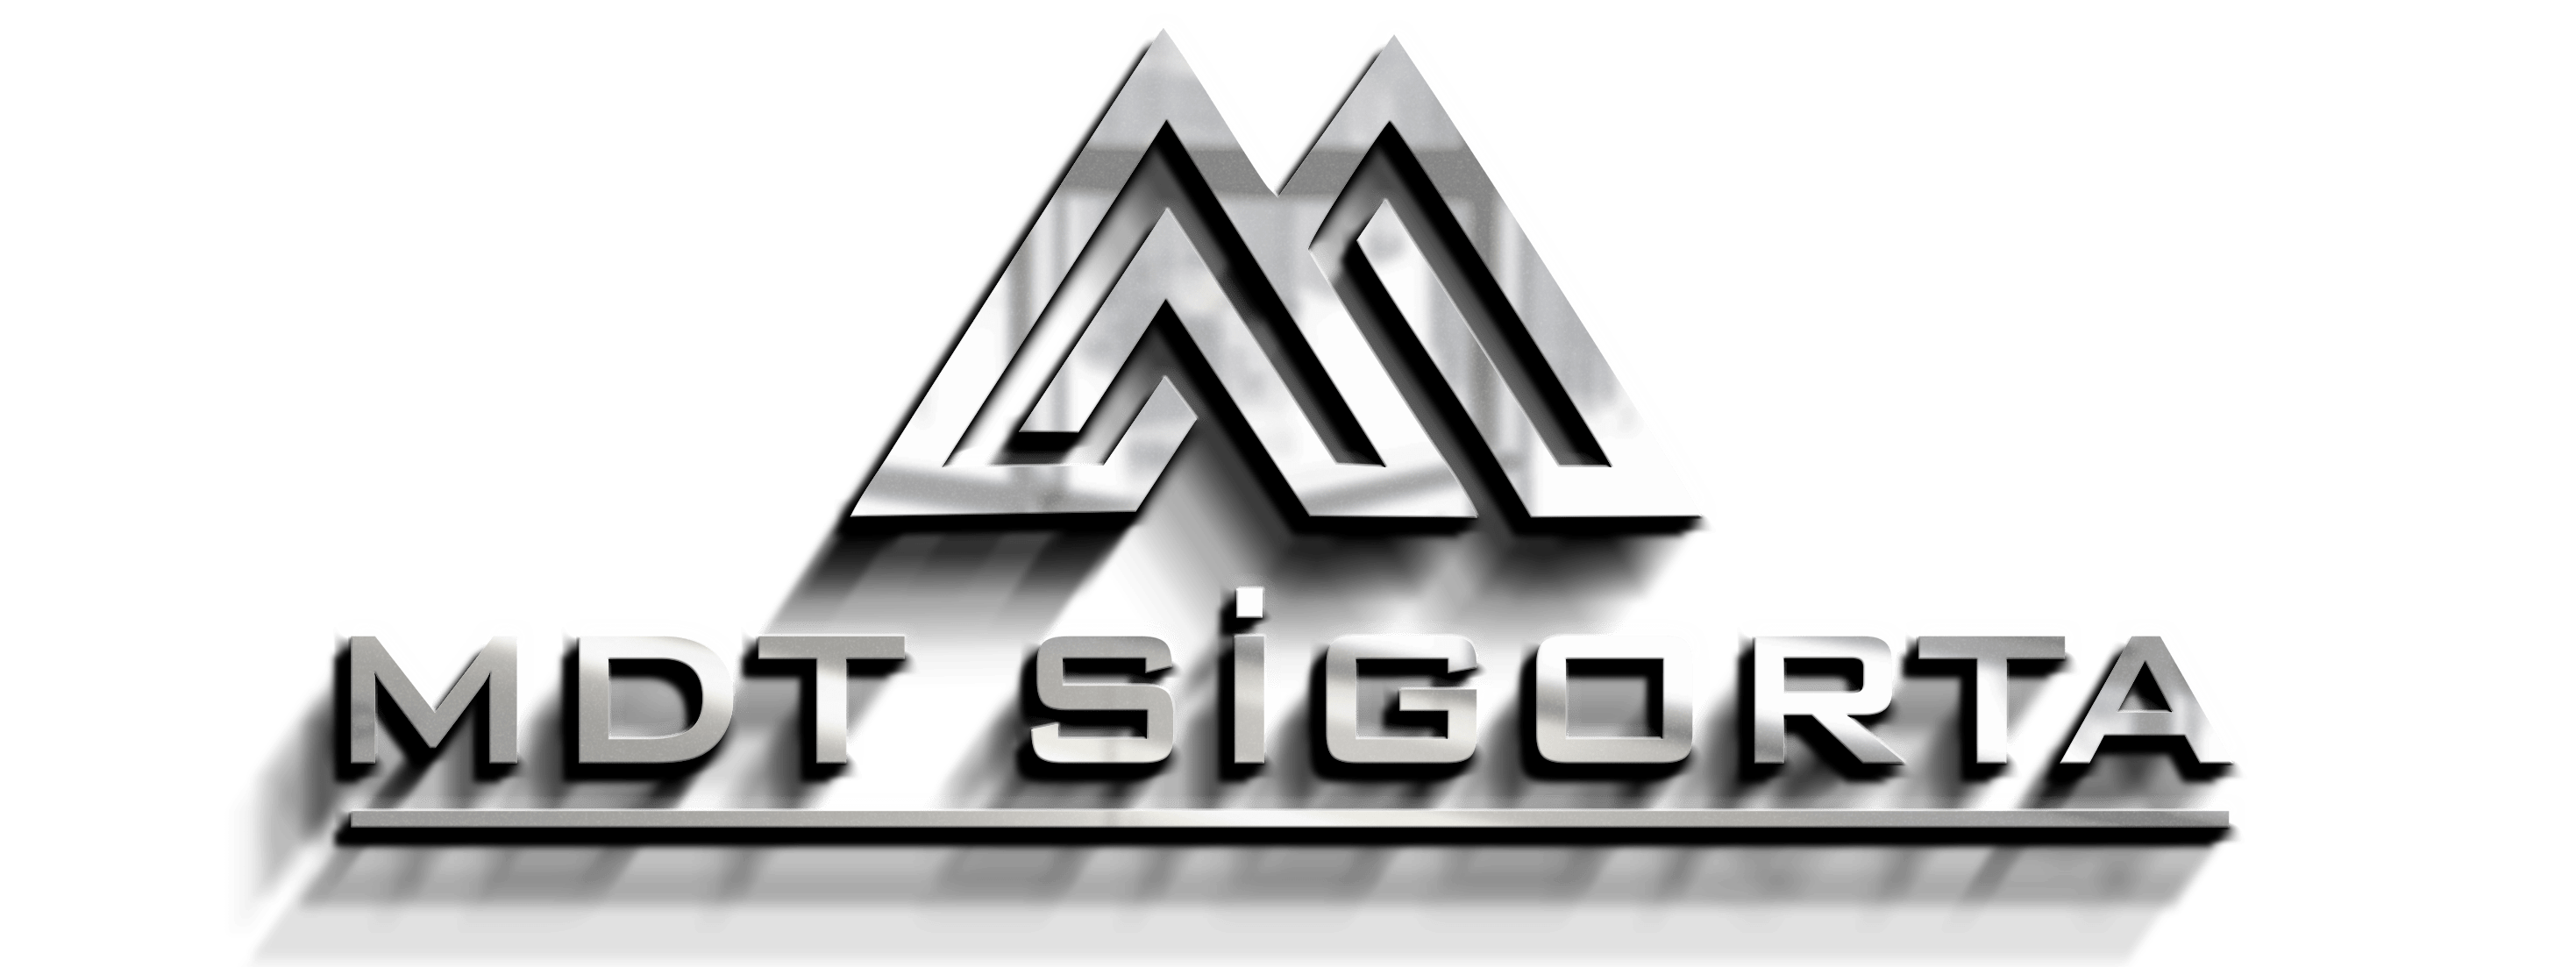 MDT Sigorta Logo